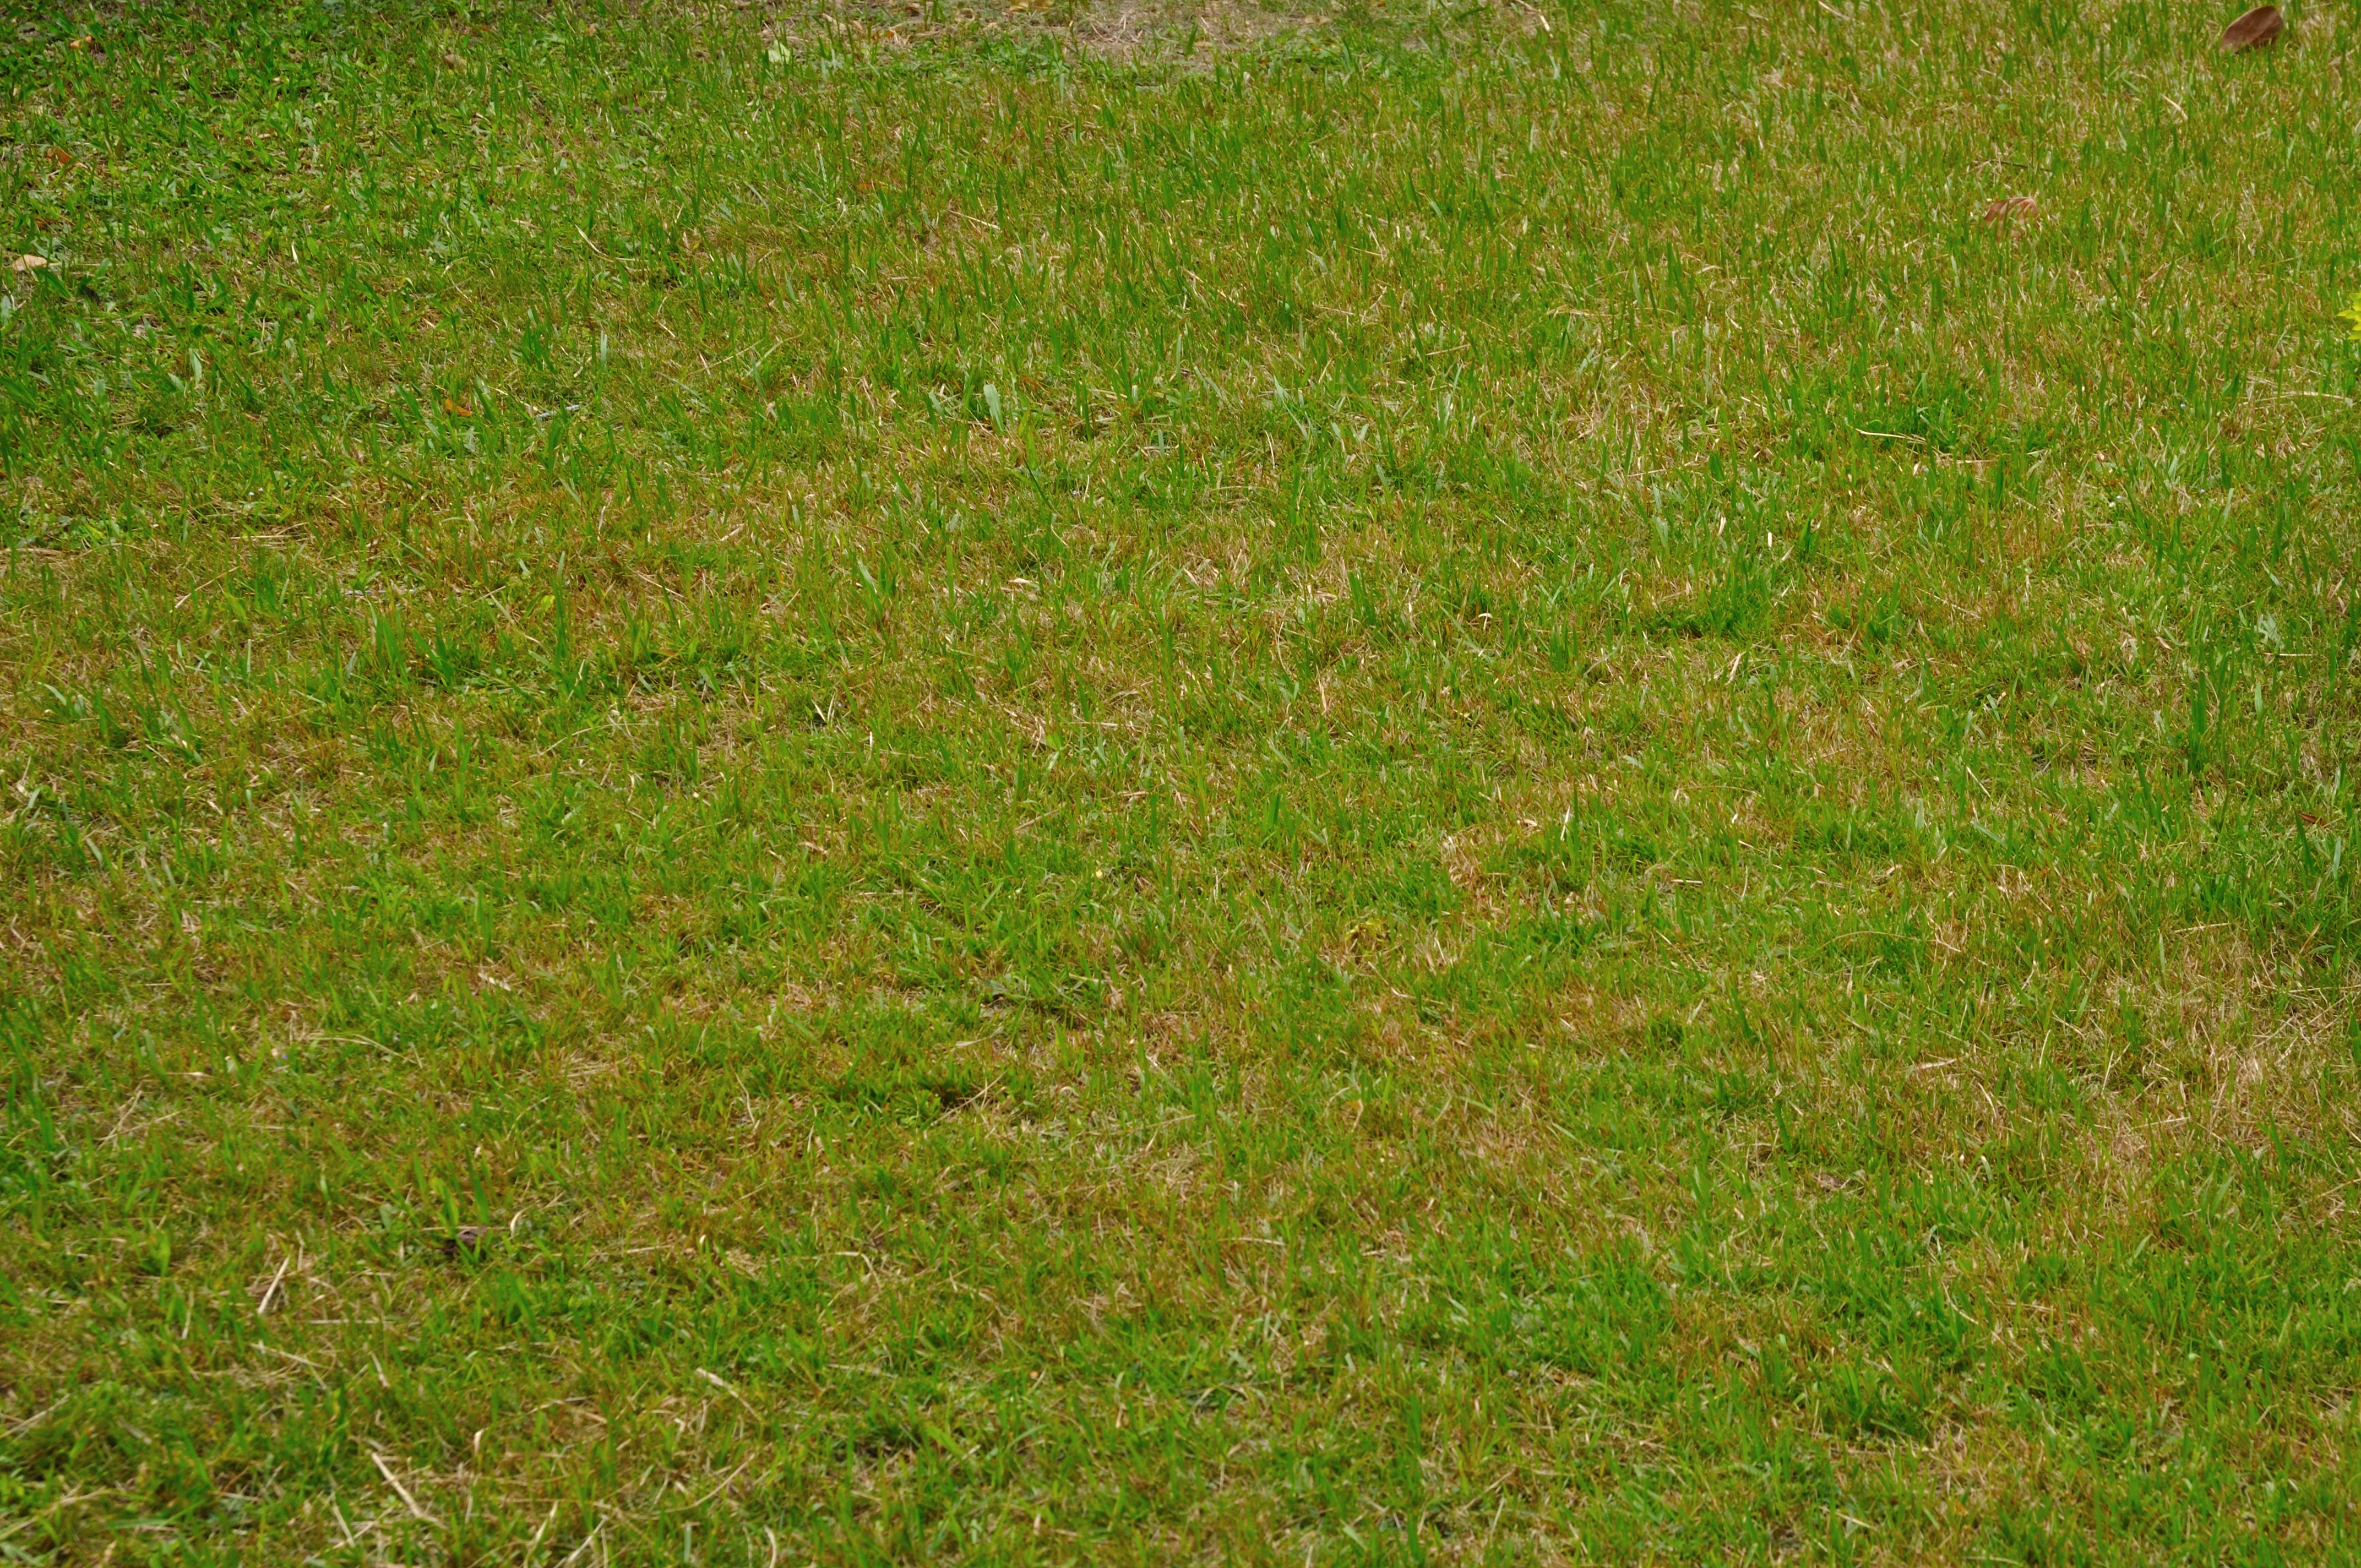 File:Grass - Kolkata 2010-11-08 7840.JPG - Wikimedia Commons